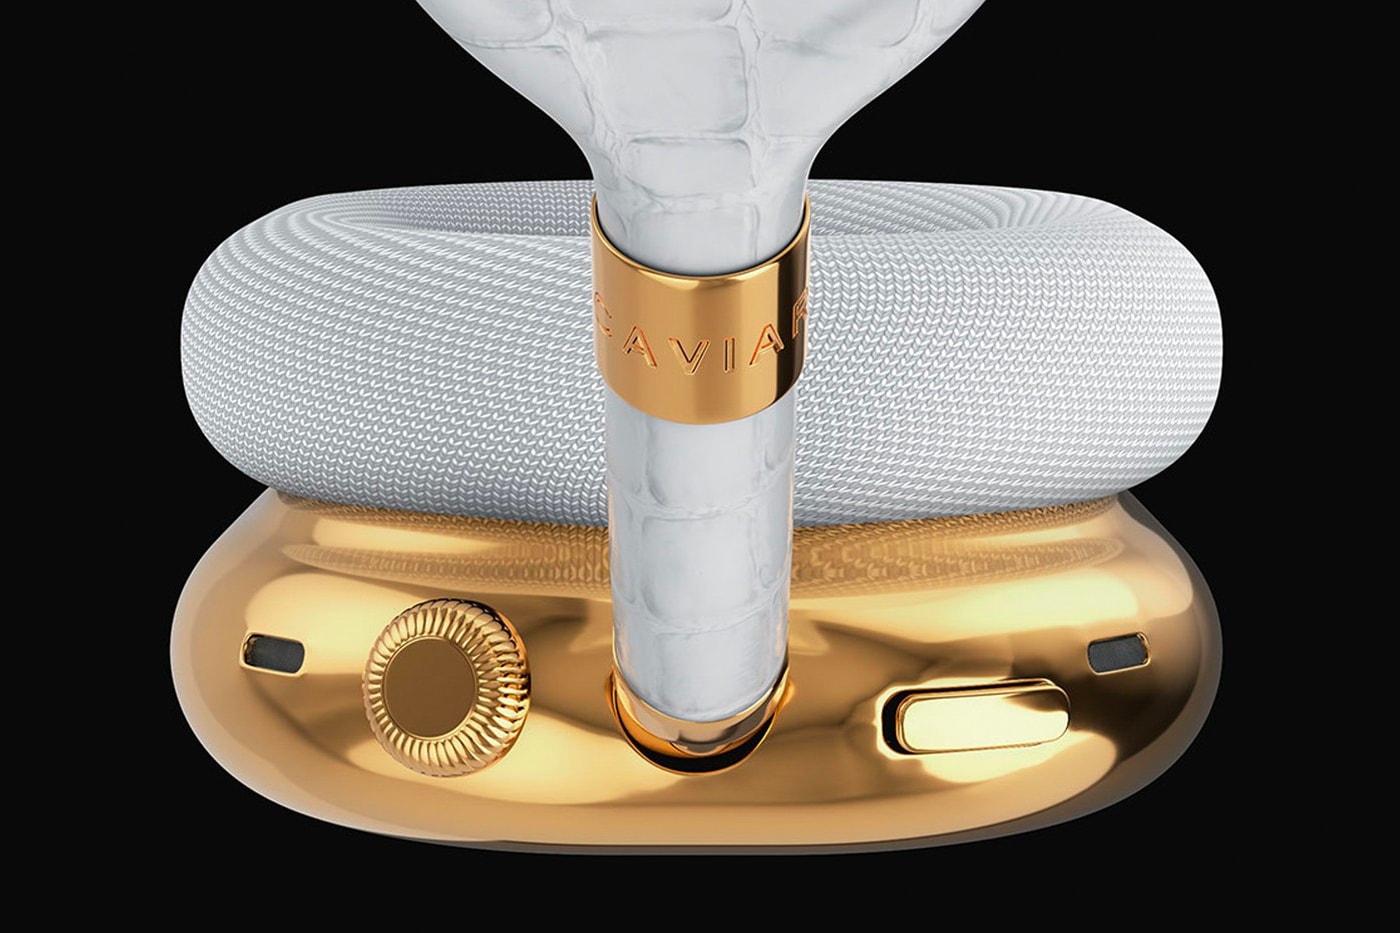 Caviar $108K USD Pure Gold Apple AirPods Max